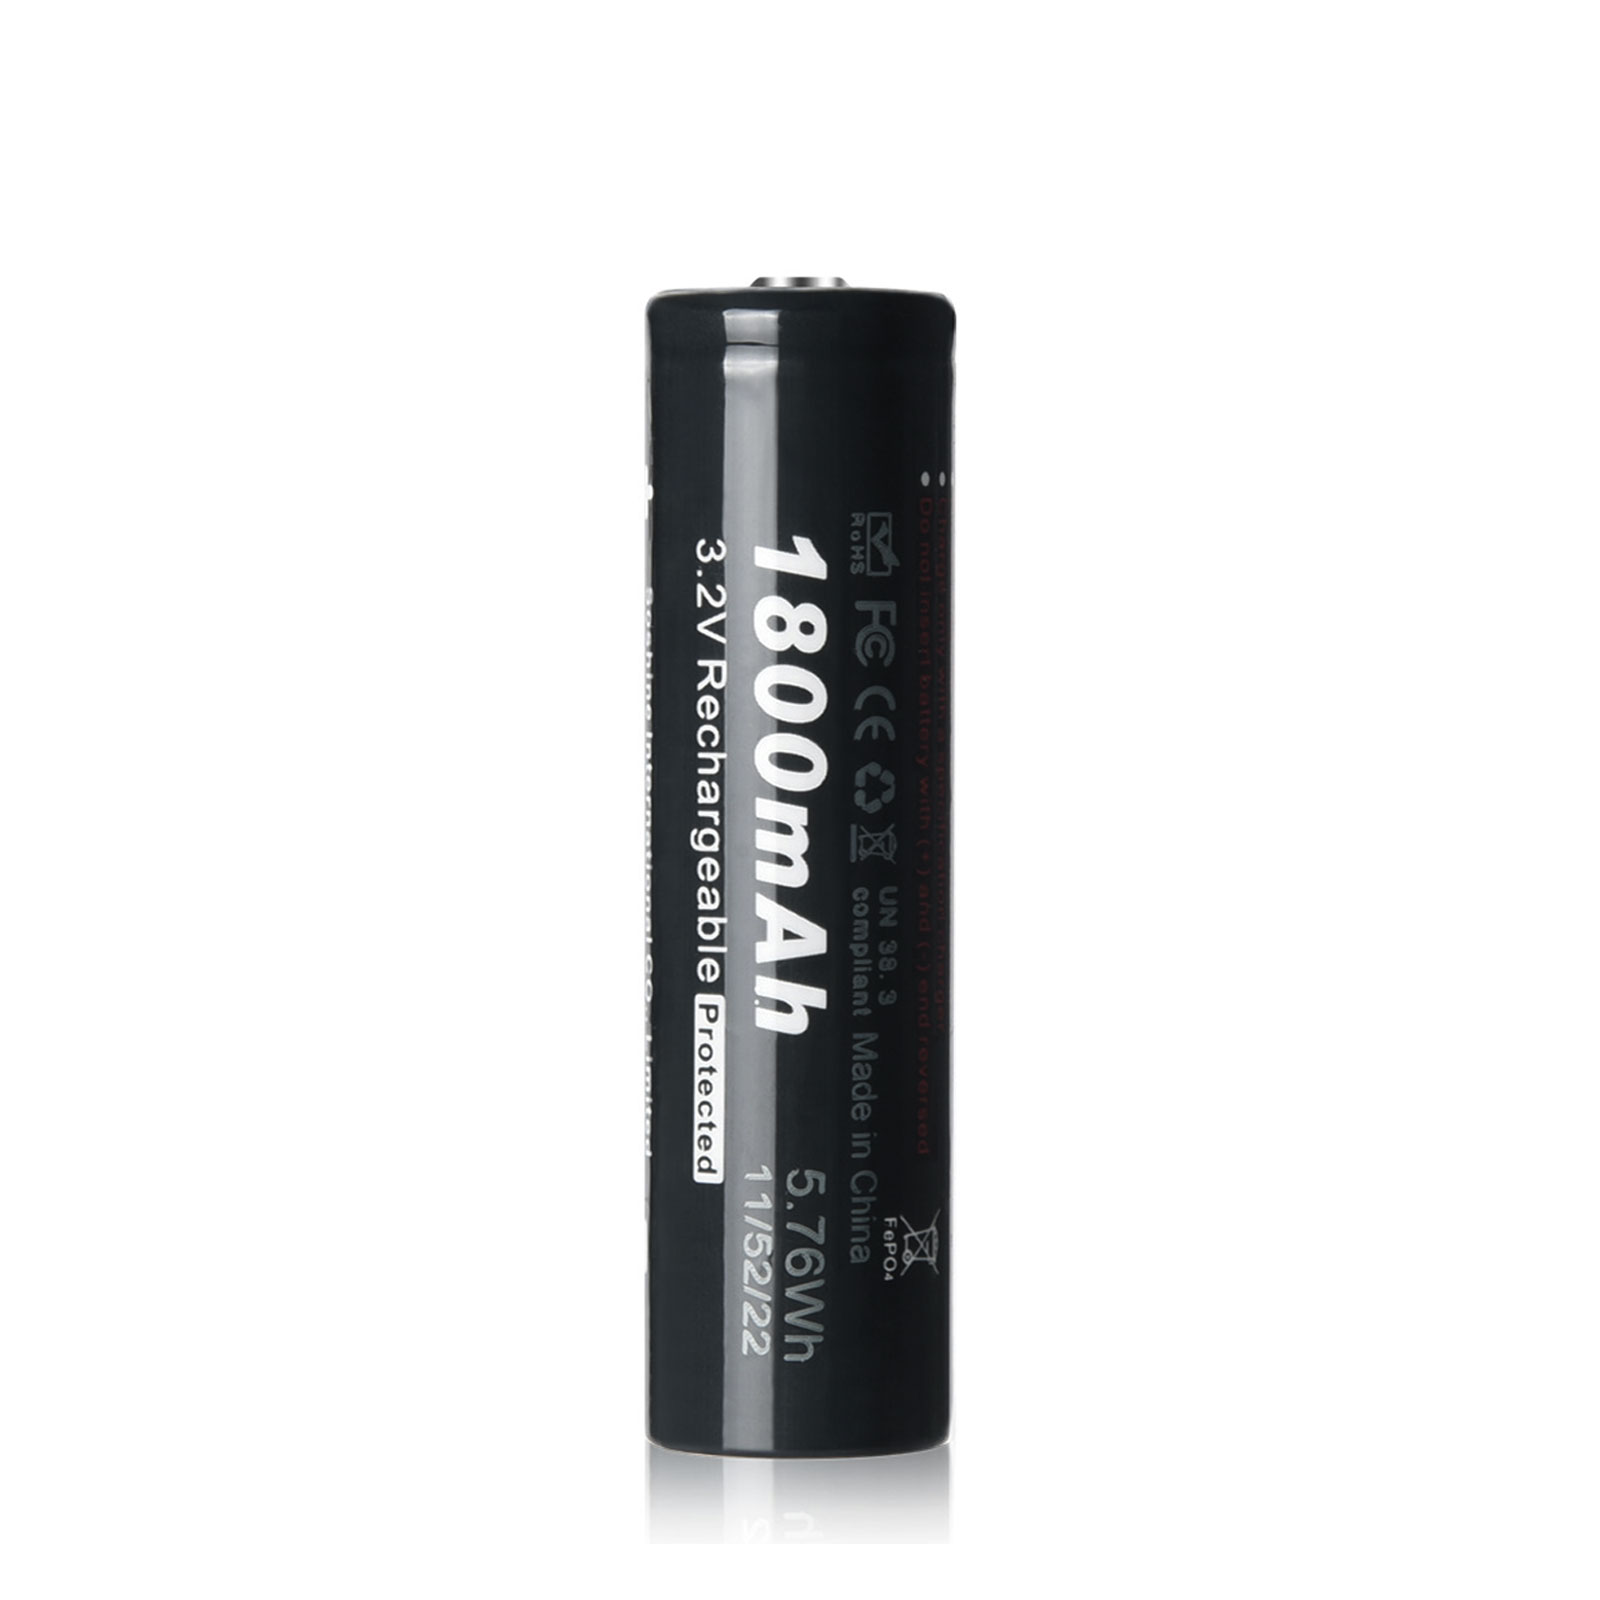 Soshine 18650 LiFePO4 Battery With Protected: 3.2V 1800mAh